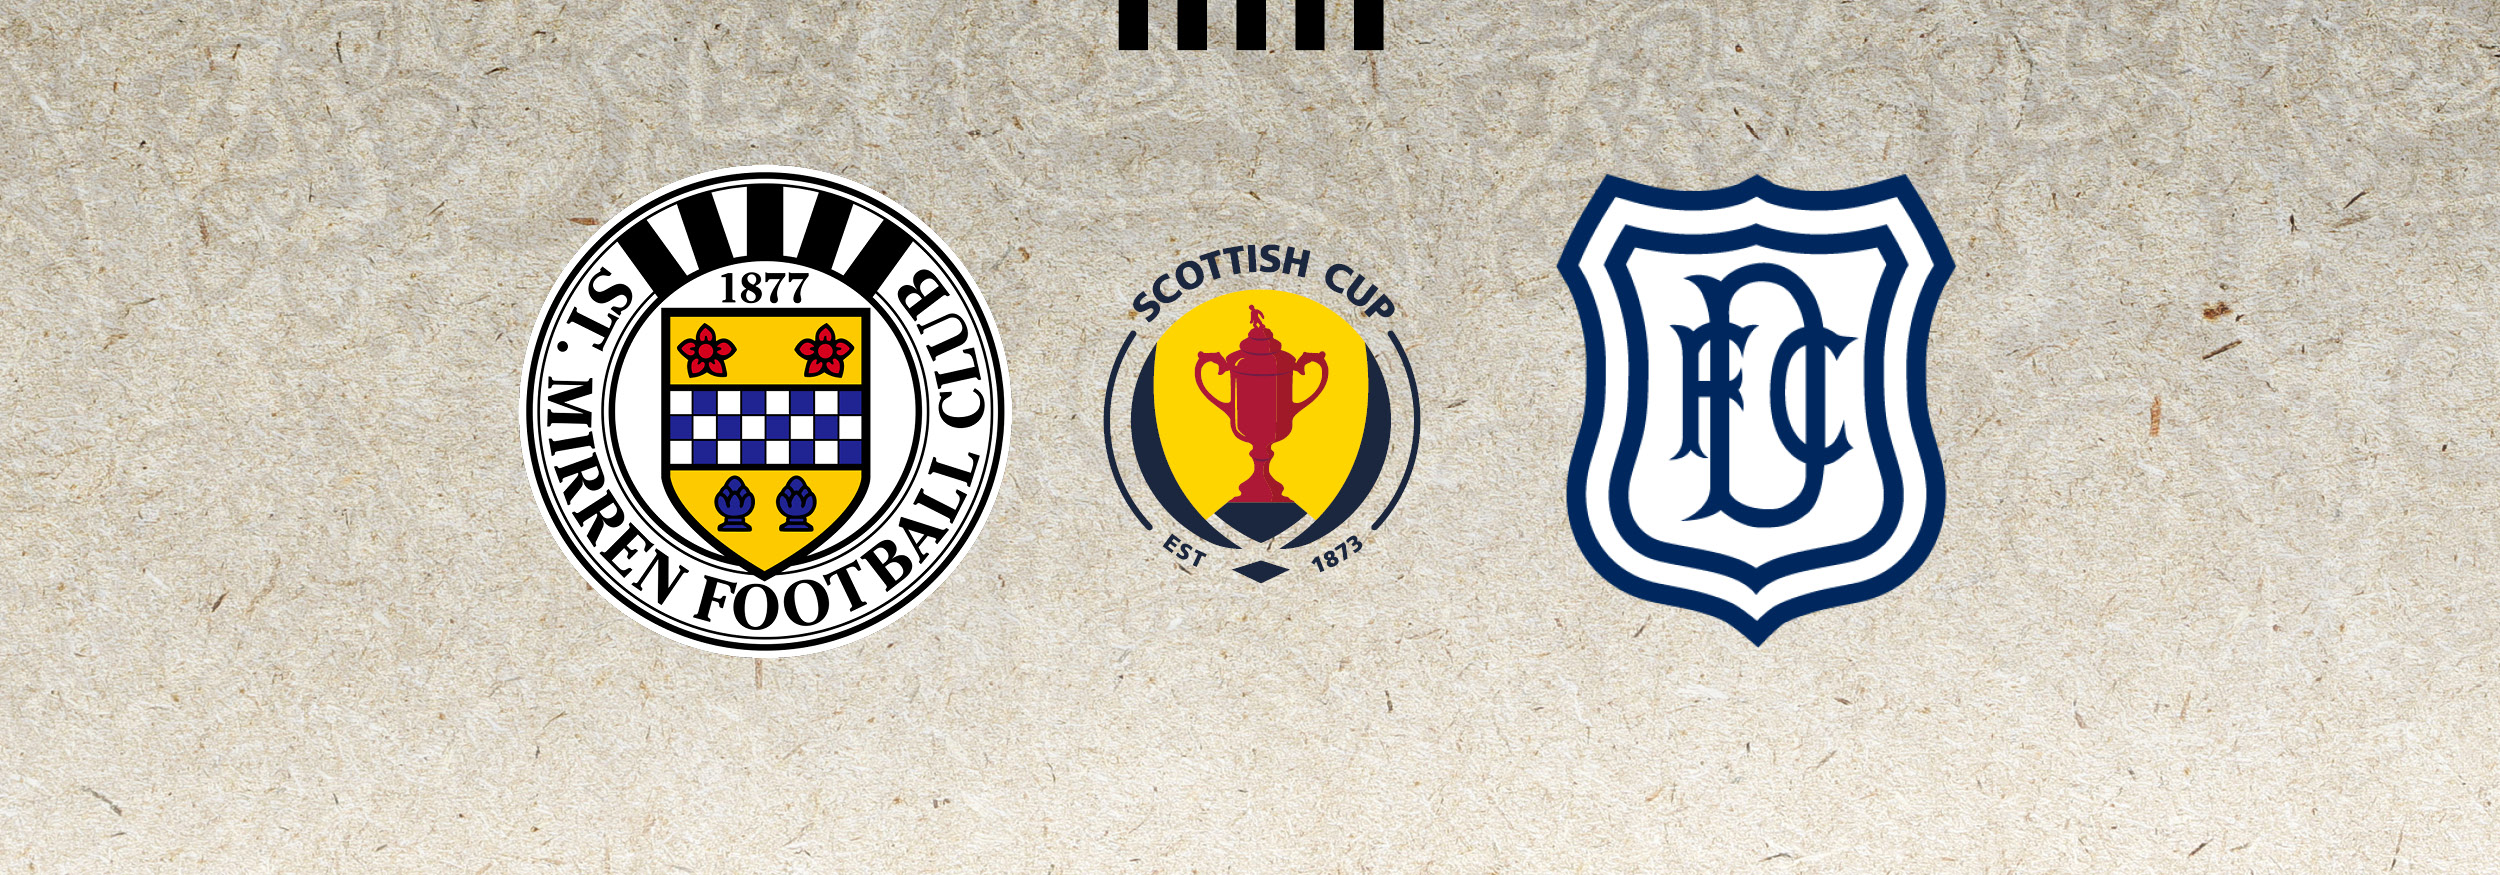 Matchday Info: St Mirren v Dundee (21st Jan)